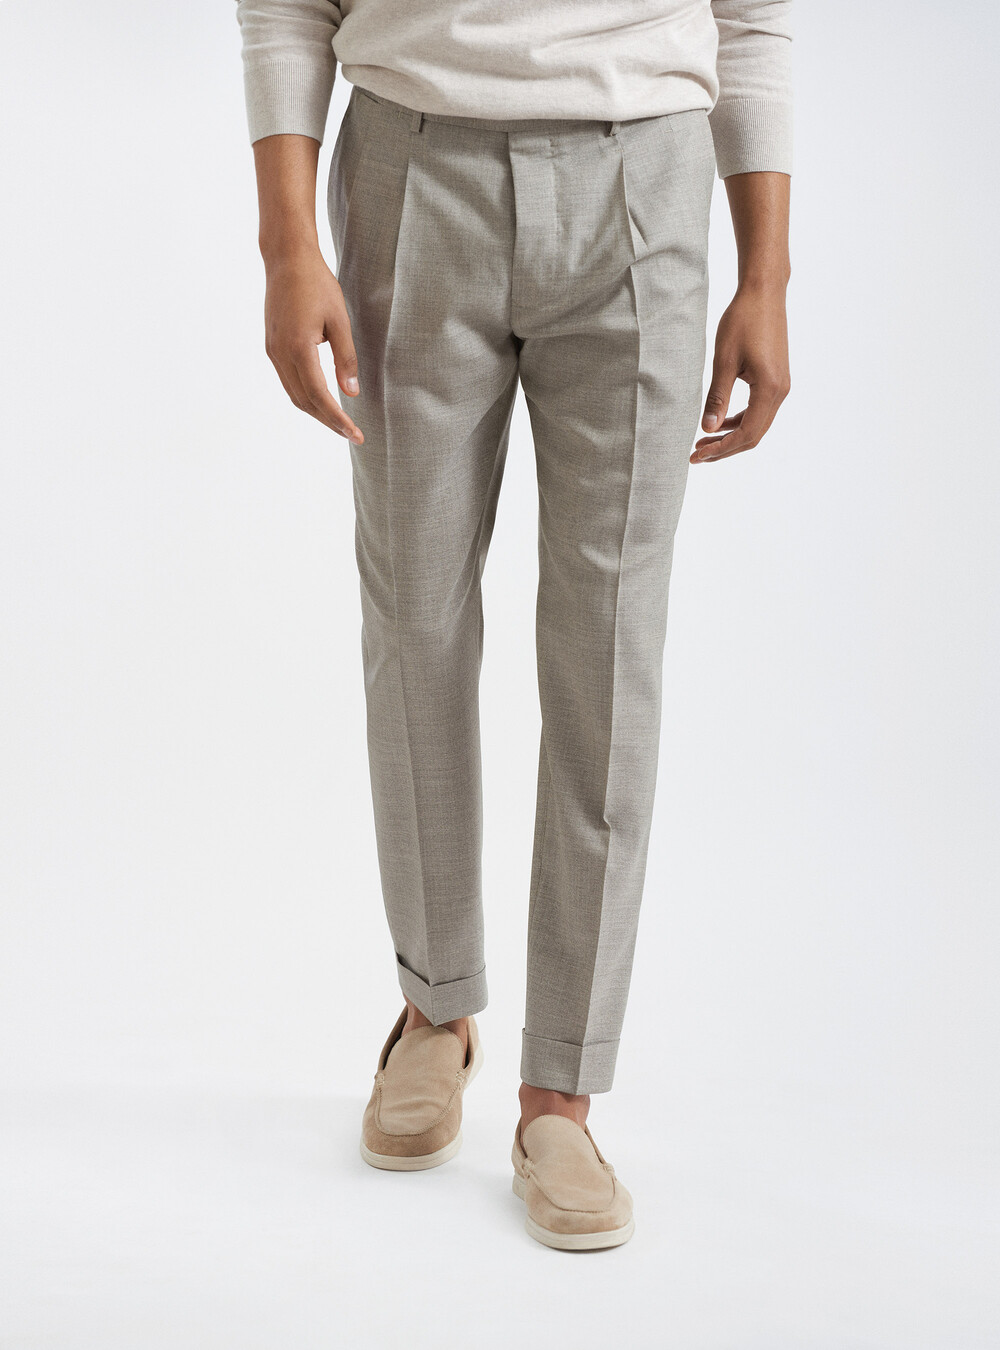 Double pleat trousers in pure wool Vitale Barberis Canonico fabric |  GutteridgeUS | catalog-gutteridge-storefront Uomo